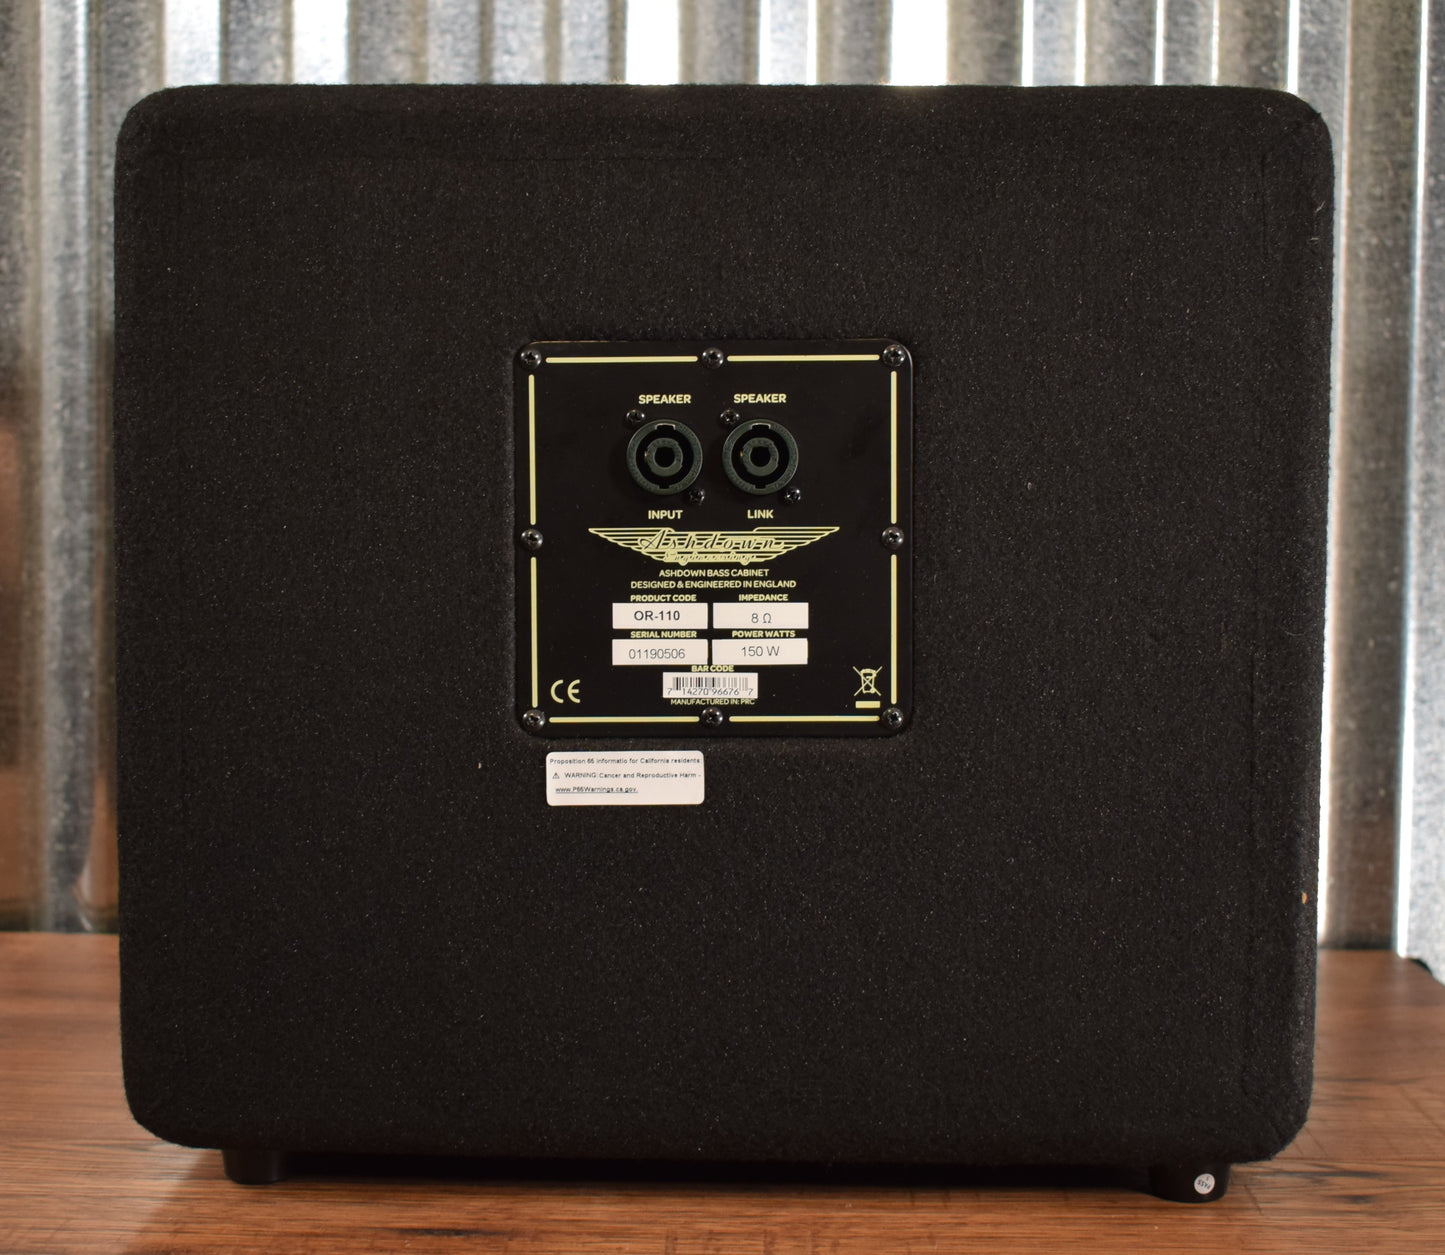 Ashdown Engineering OR-110 Original-110 1x10" Lightweight Bass Amplifier Speaker Cabinet Demo